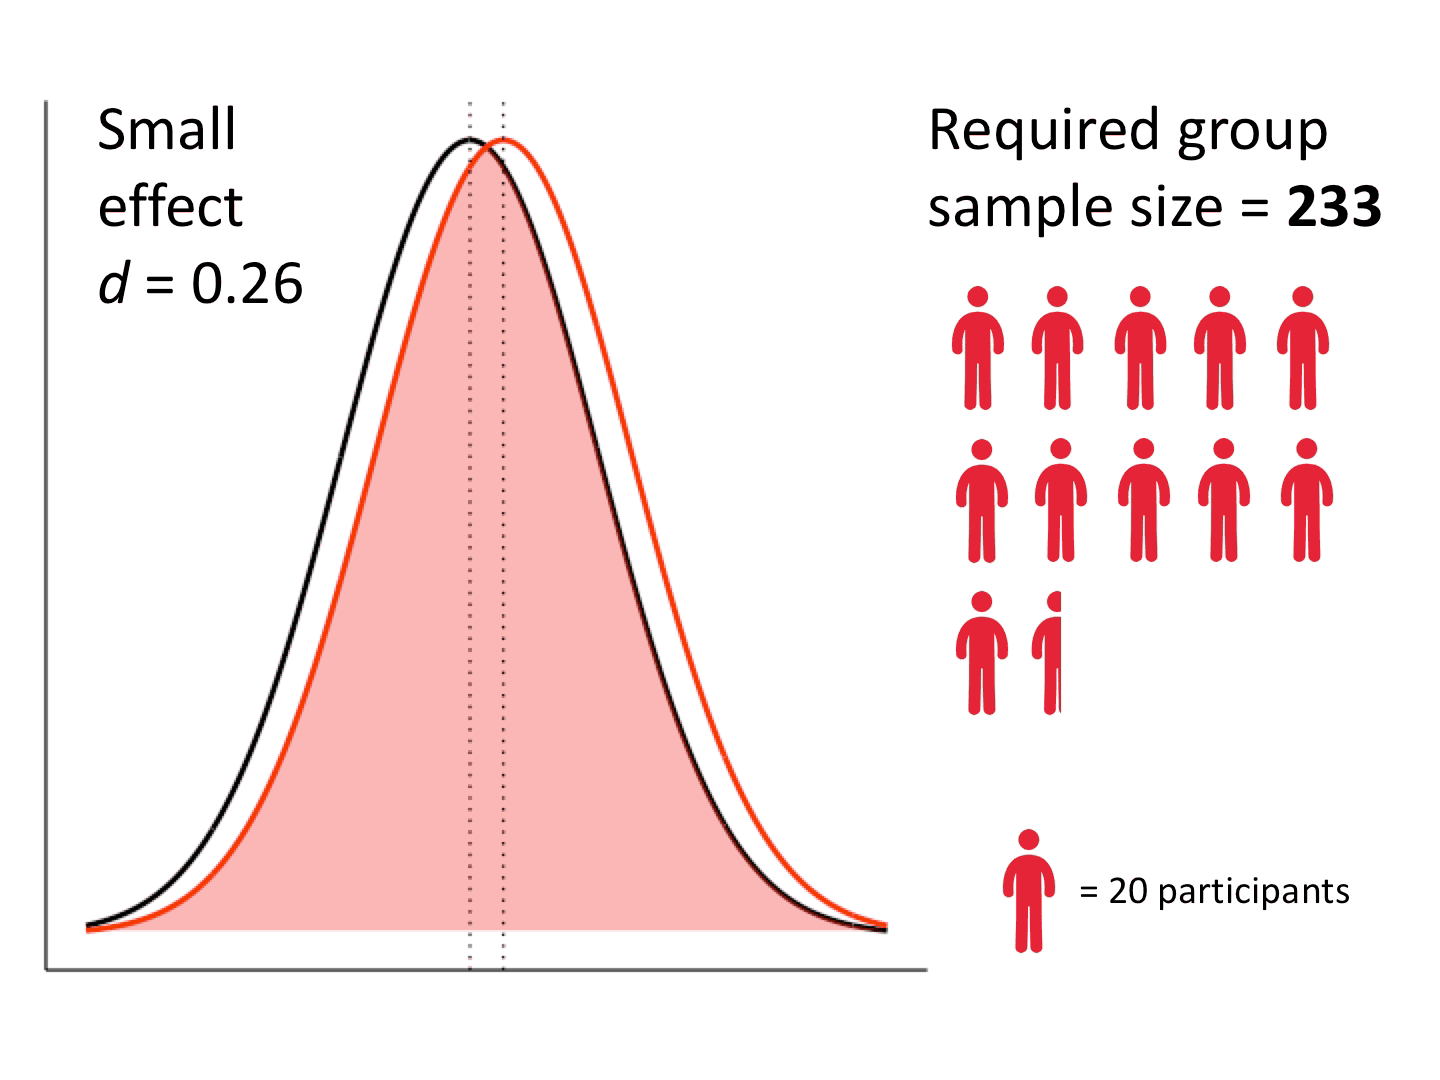 qualitative research minimum sample size